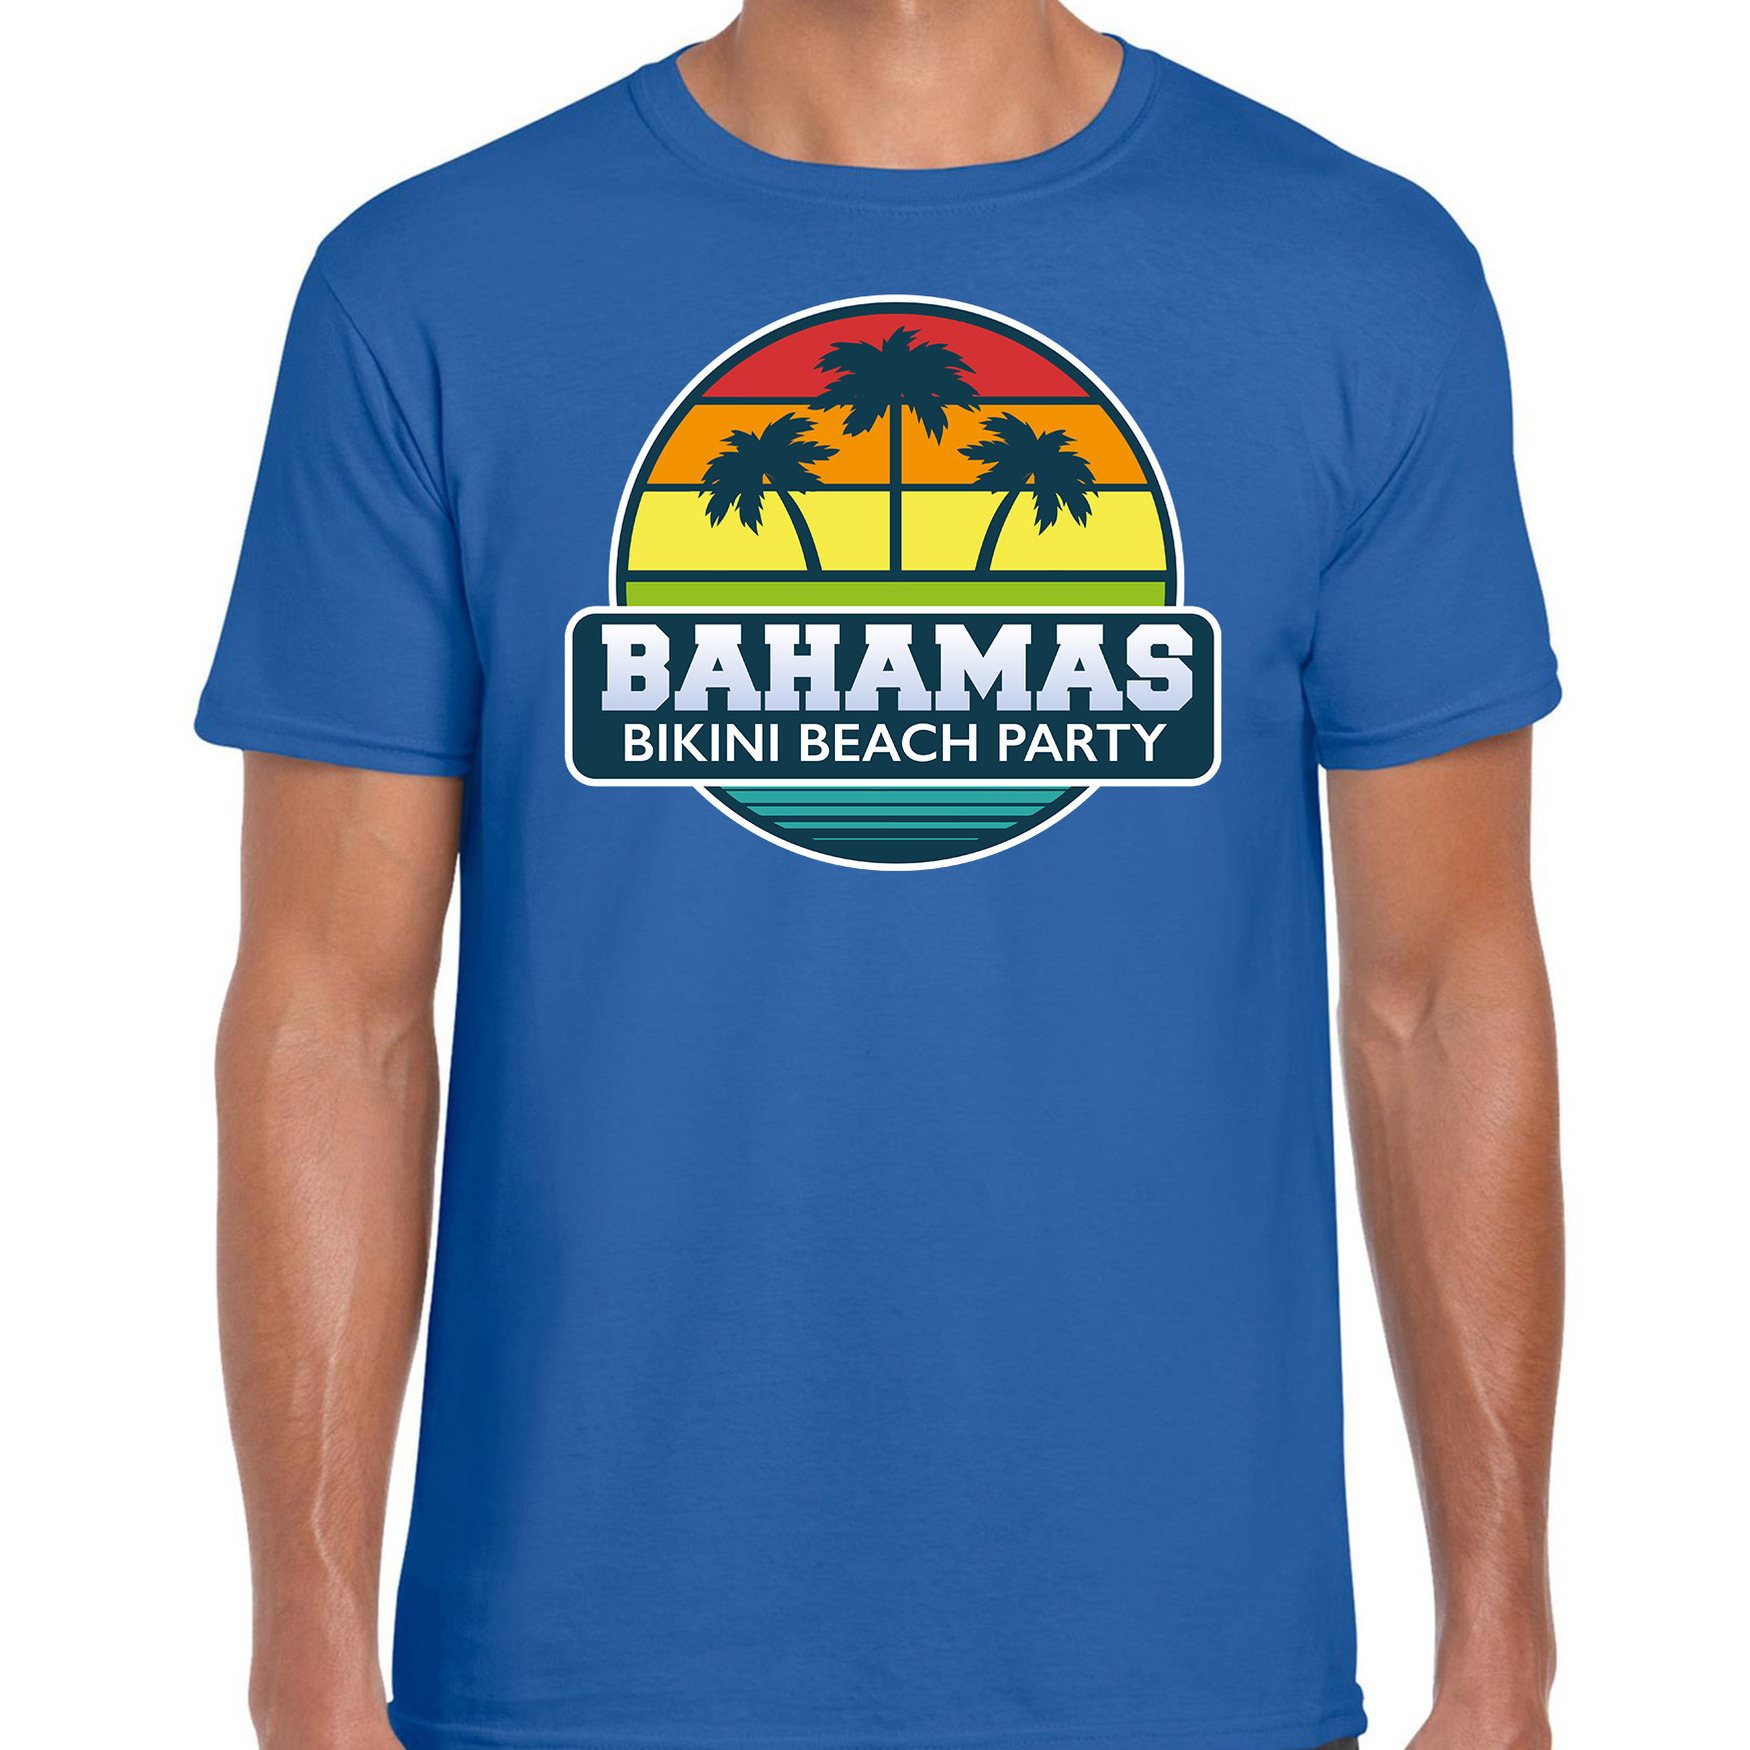 Bahamas zomer t-shirt - shirt Bahamas bikini beach party blauw voor heren